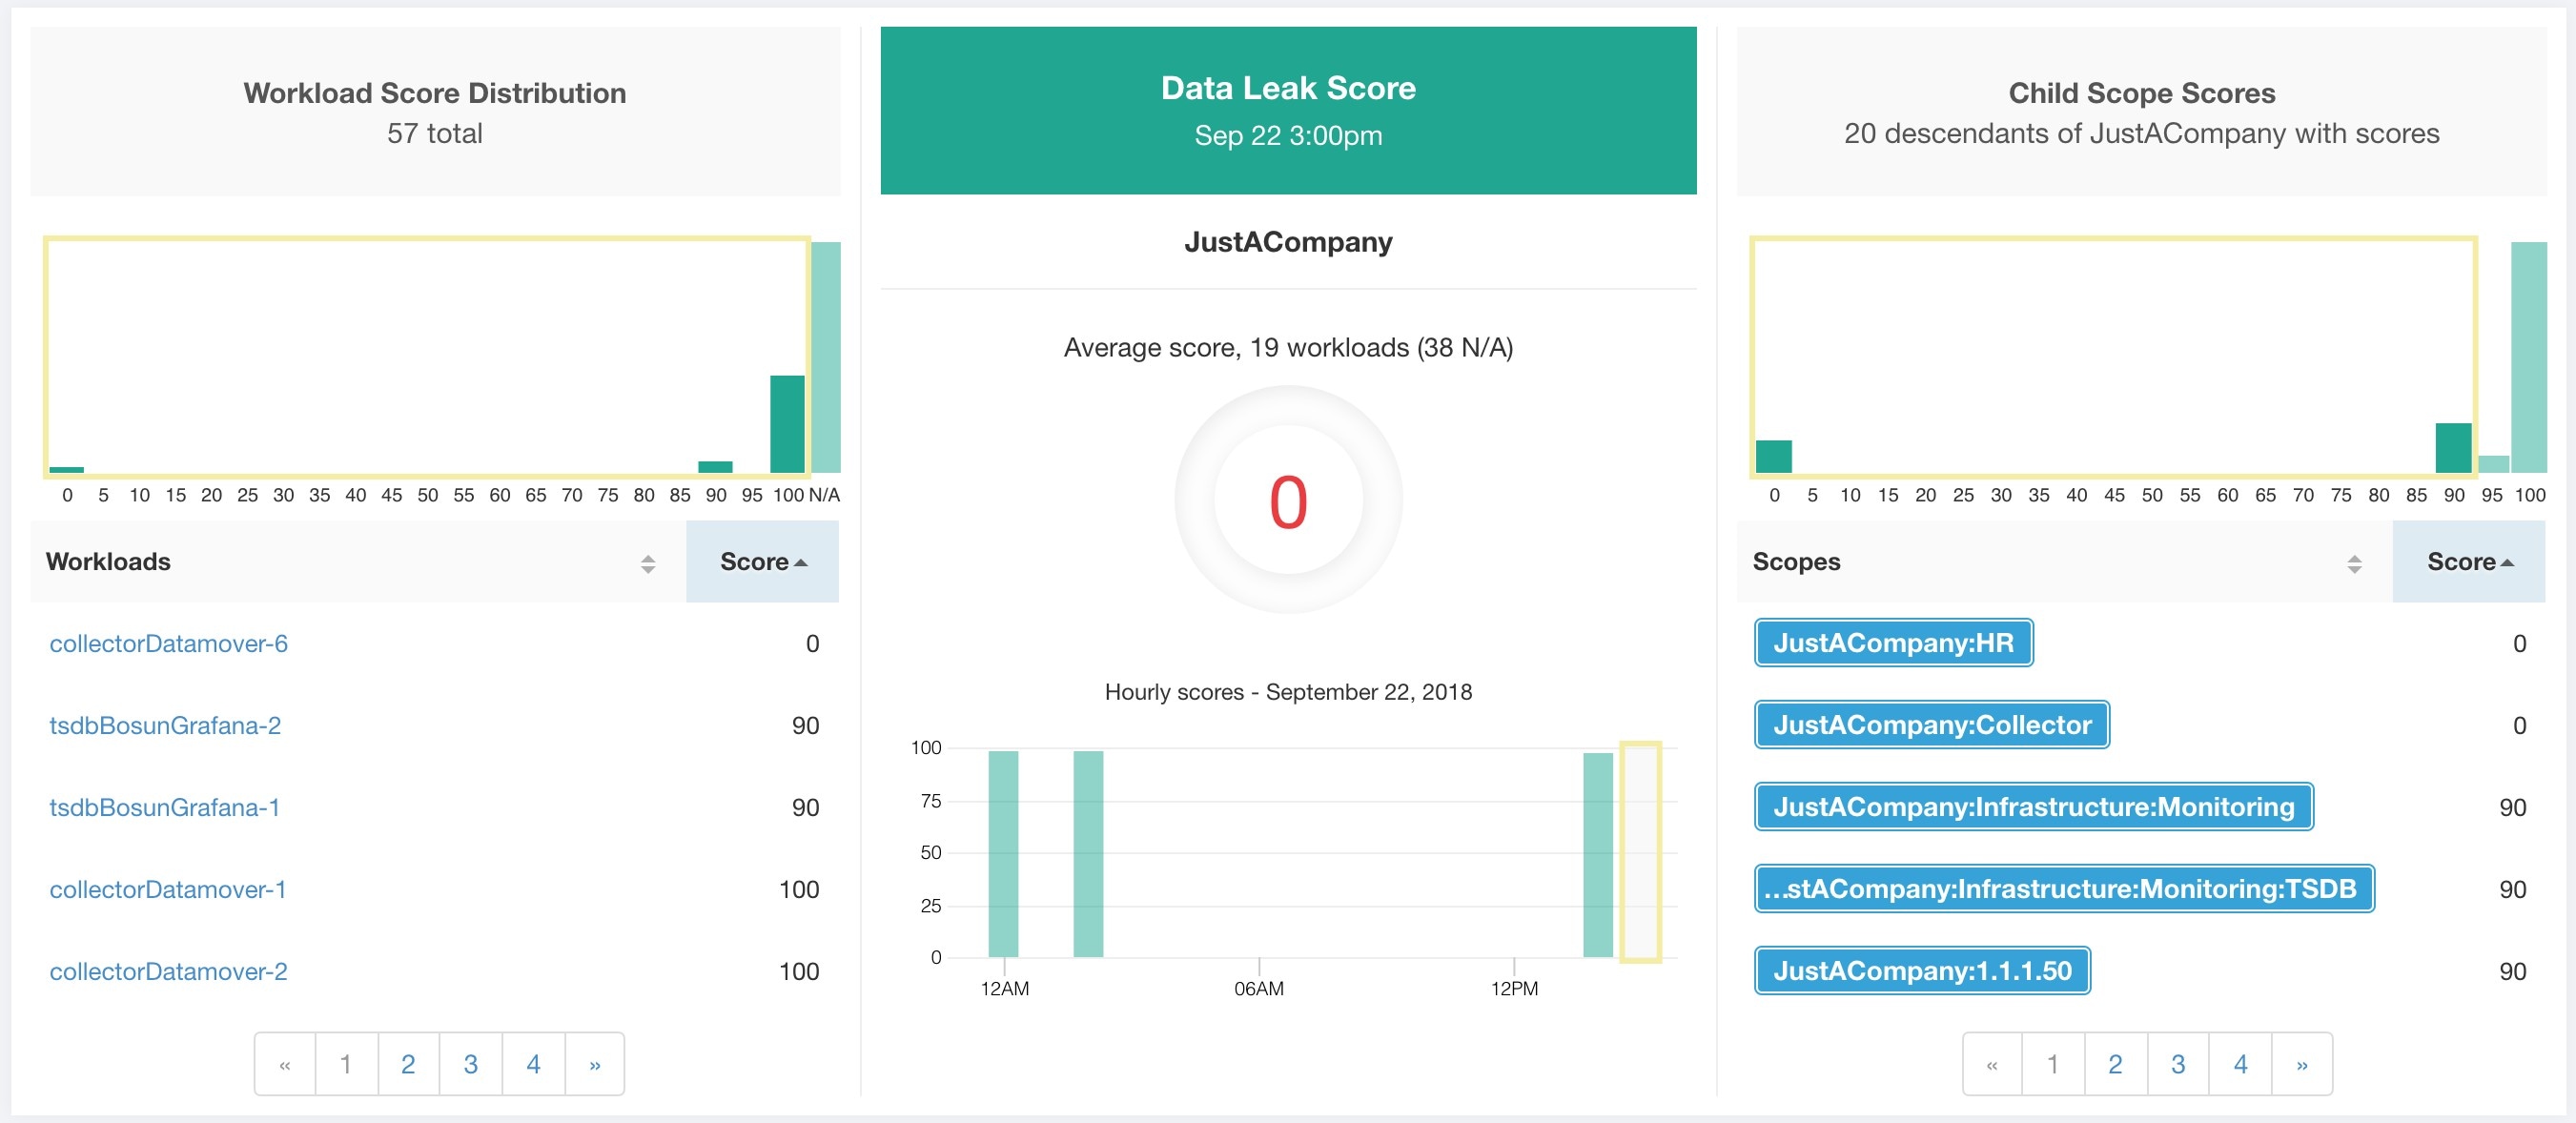 Data Leak Score Details